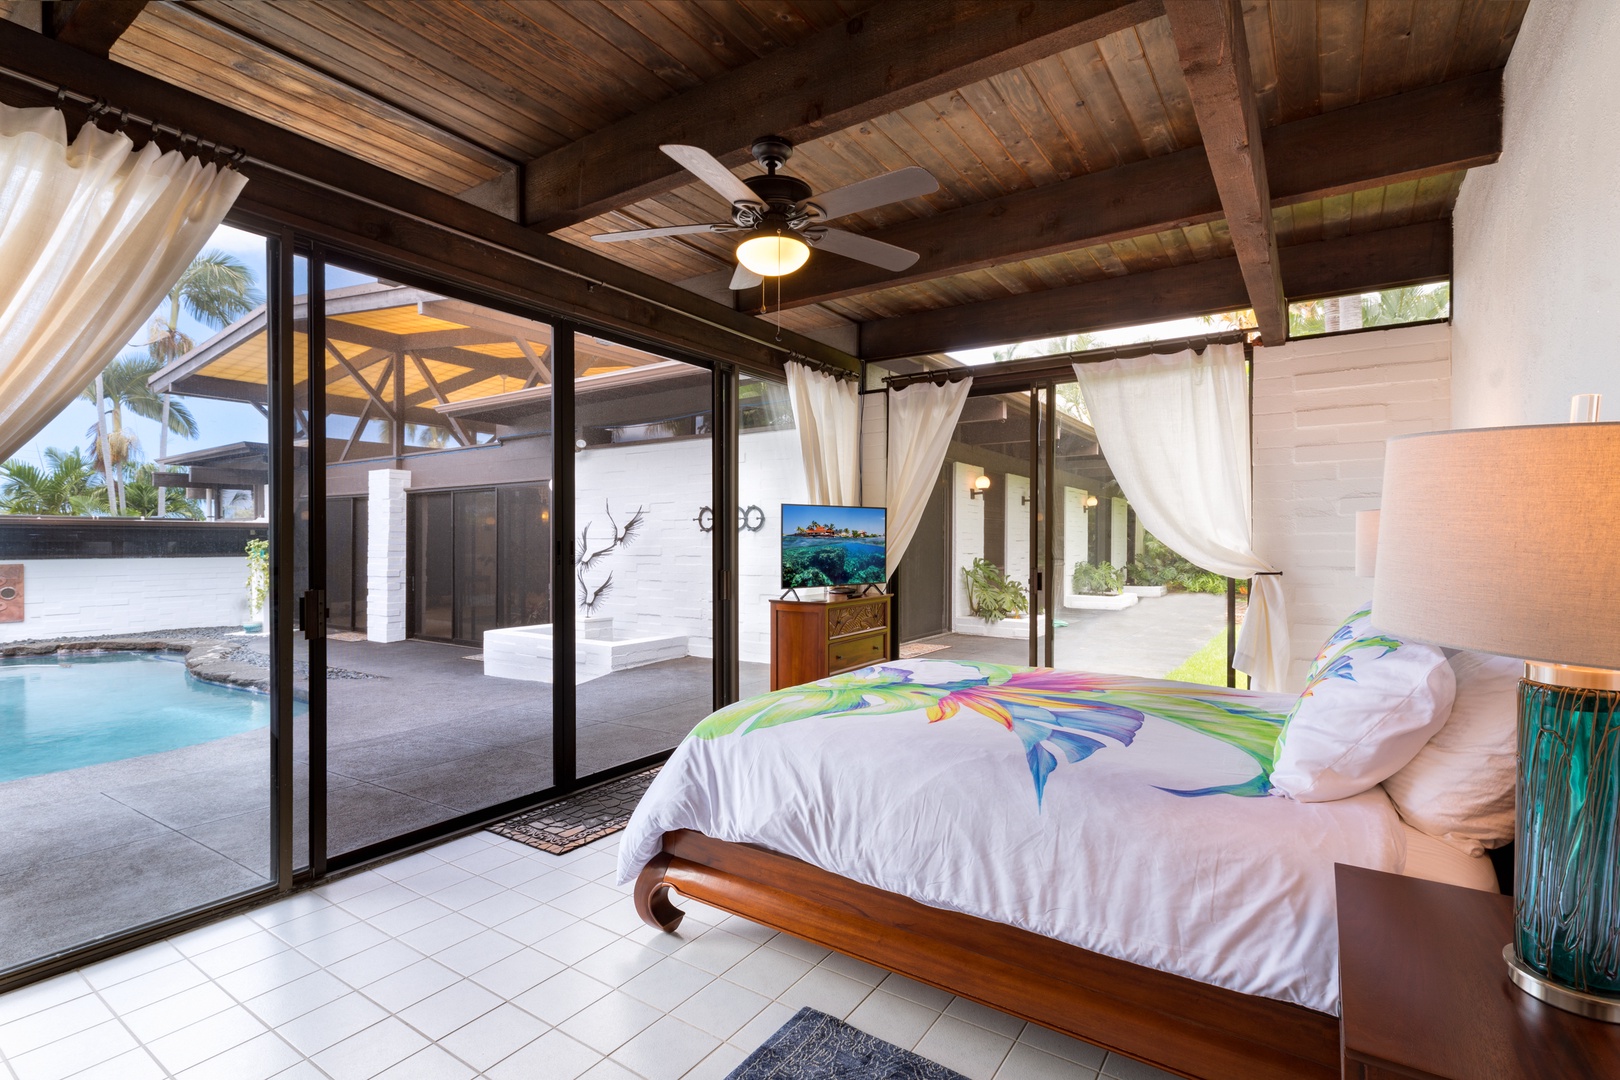 Kailua Kona Vacation Rentals, Ono Oasis - Second bedroom